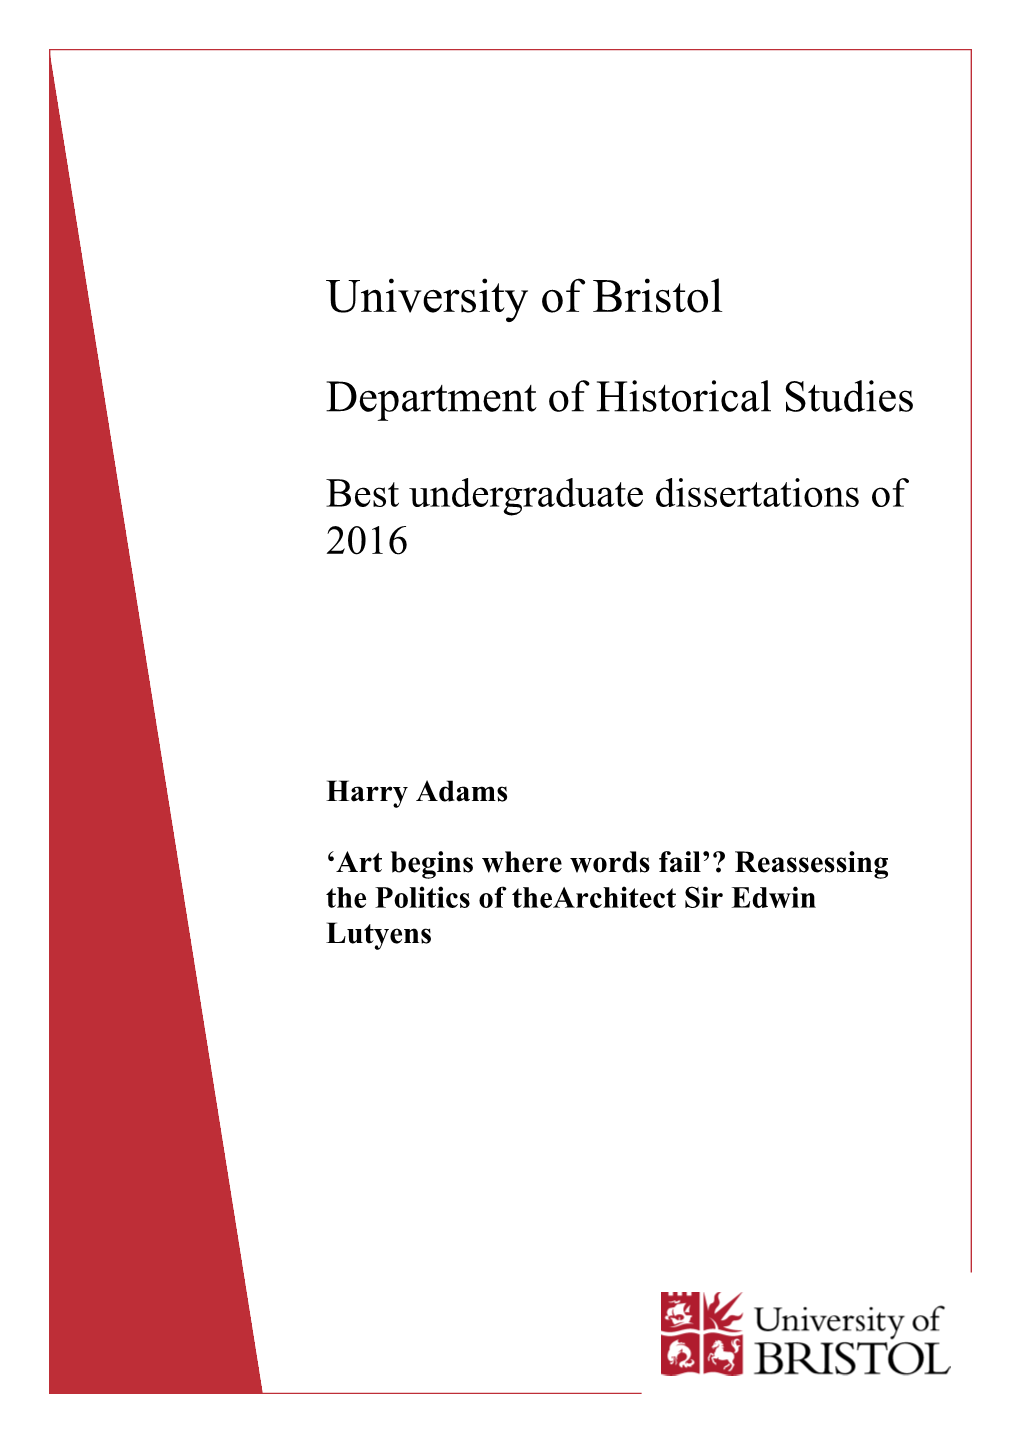 Harry Adams 2016 (PDF, 1168Kb)